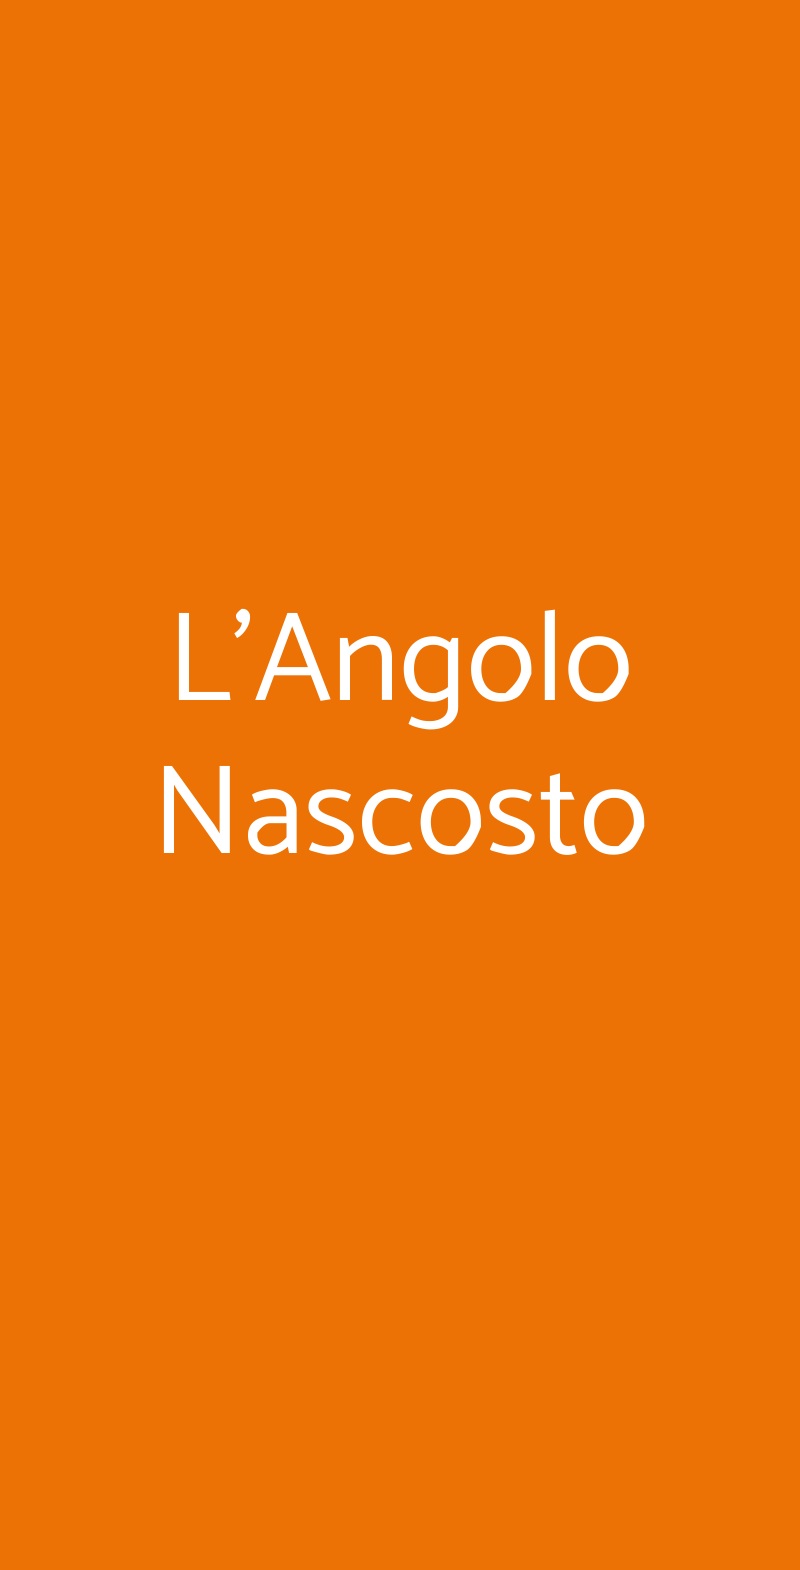 L'Angolo Nascosto Milano menù 1 pagina